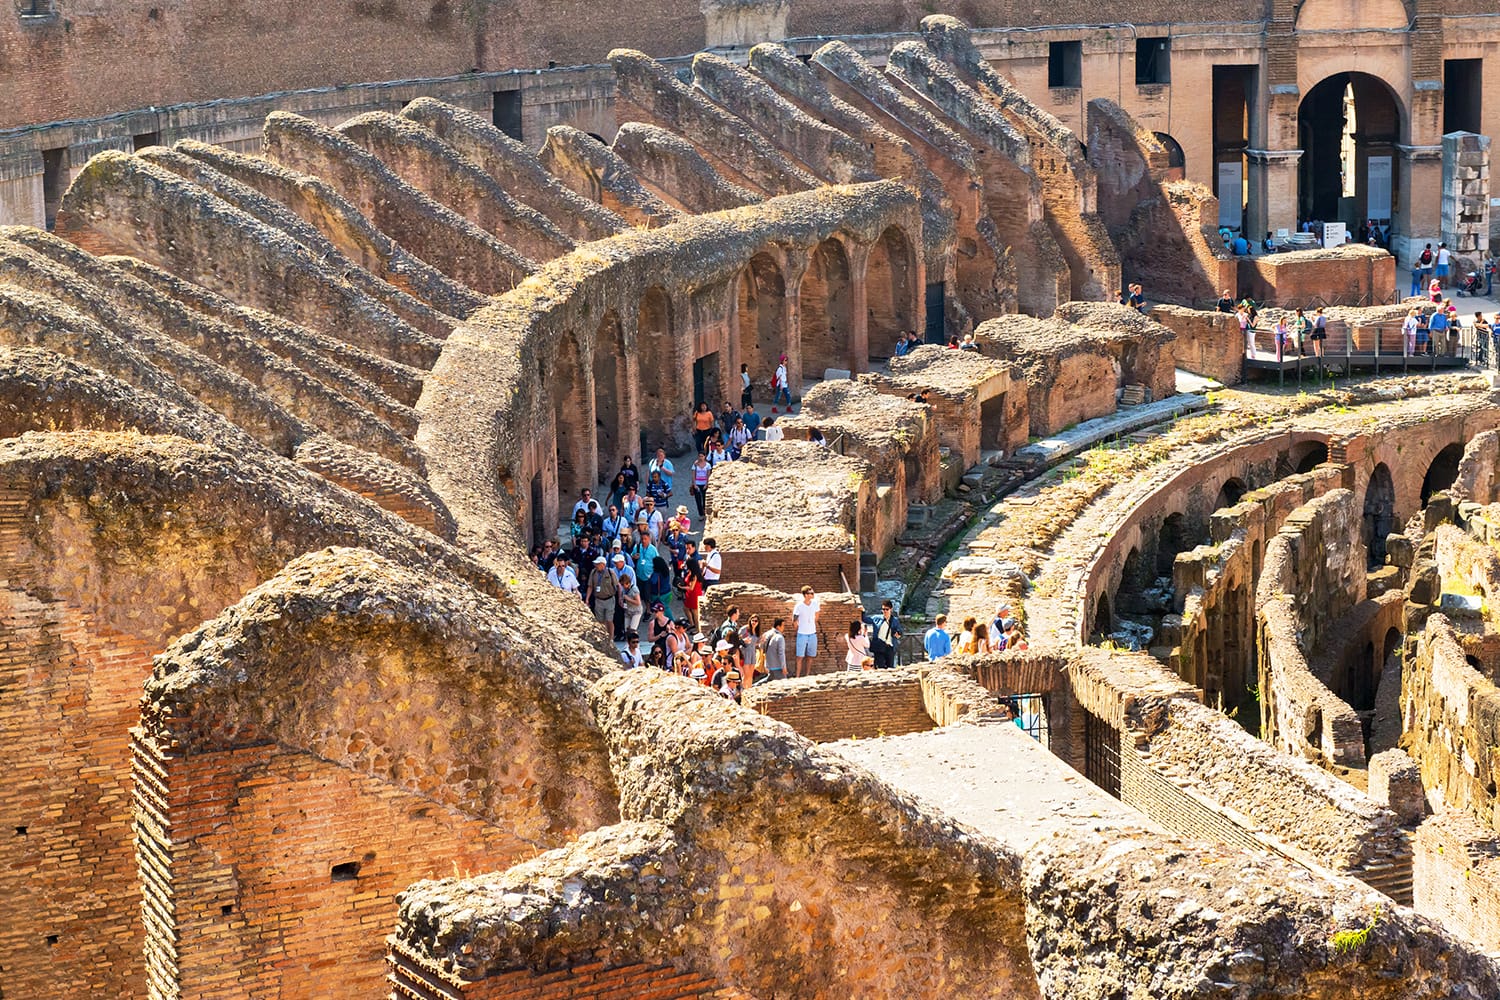 Colosseum (Coliseum) in Rome, Italy.